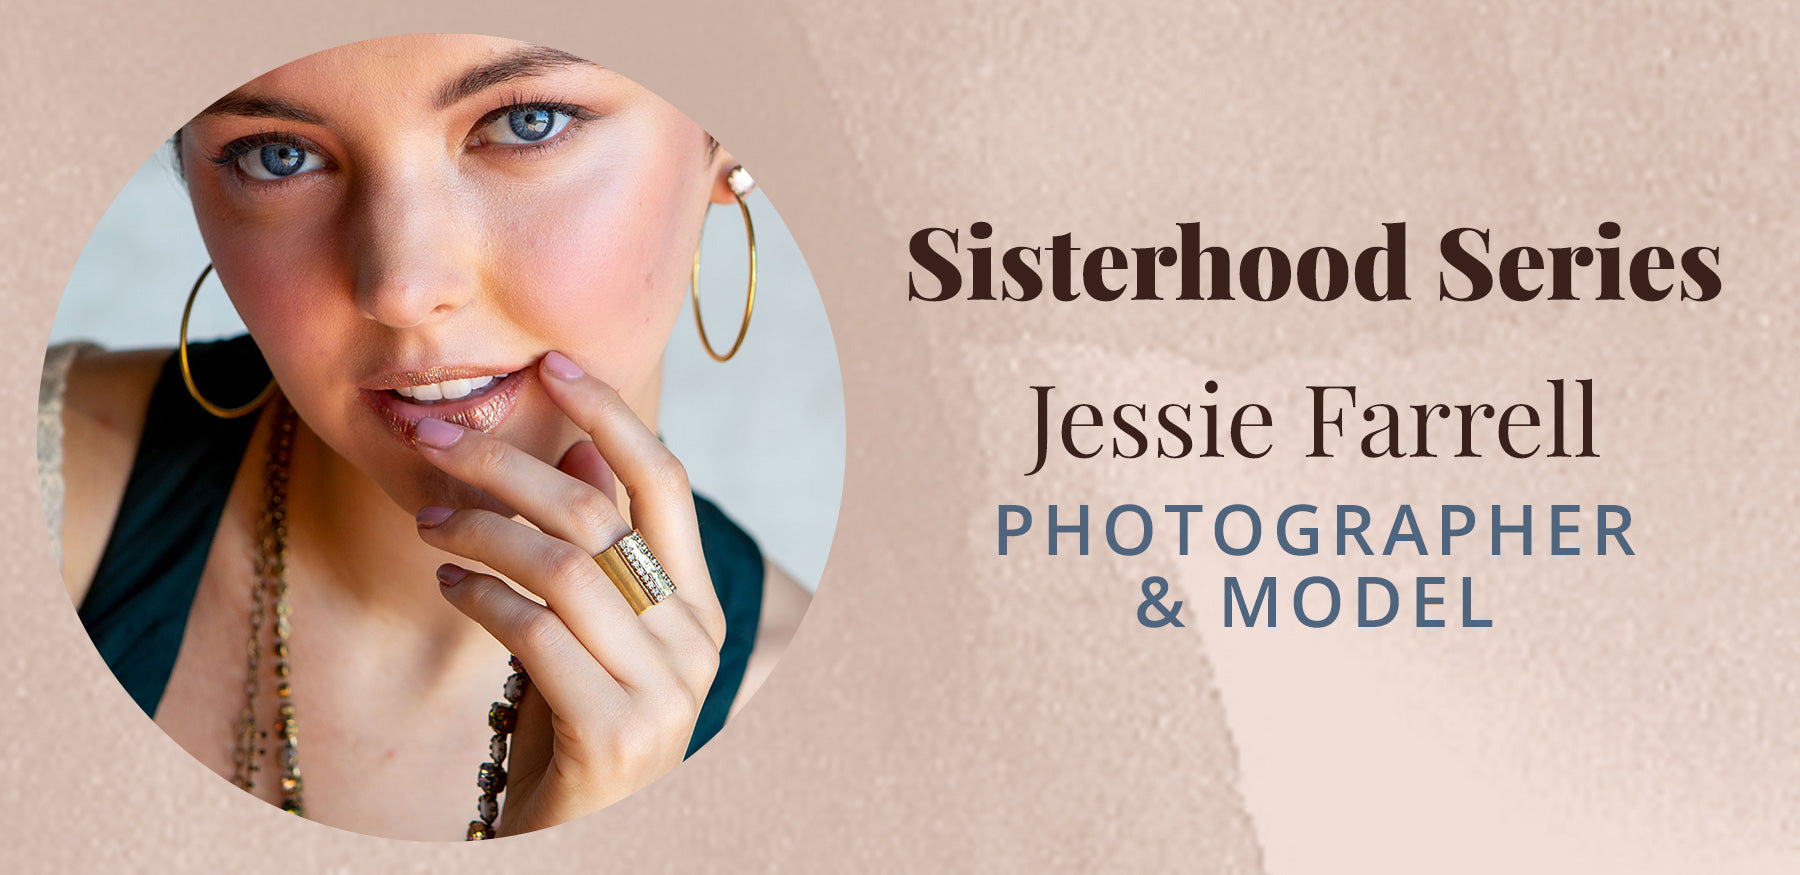 The Sisterhood Series with Jessie Farrell